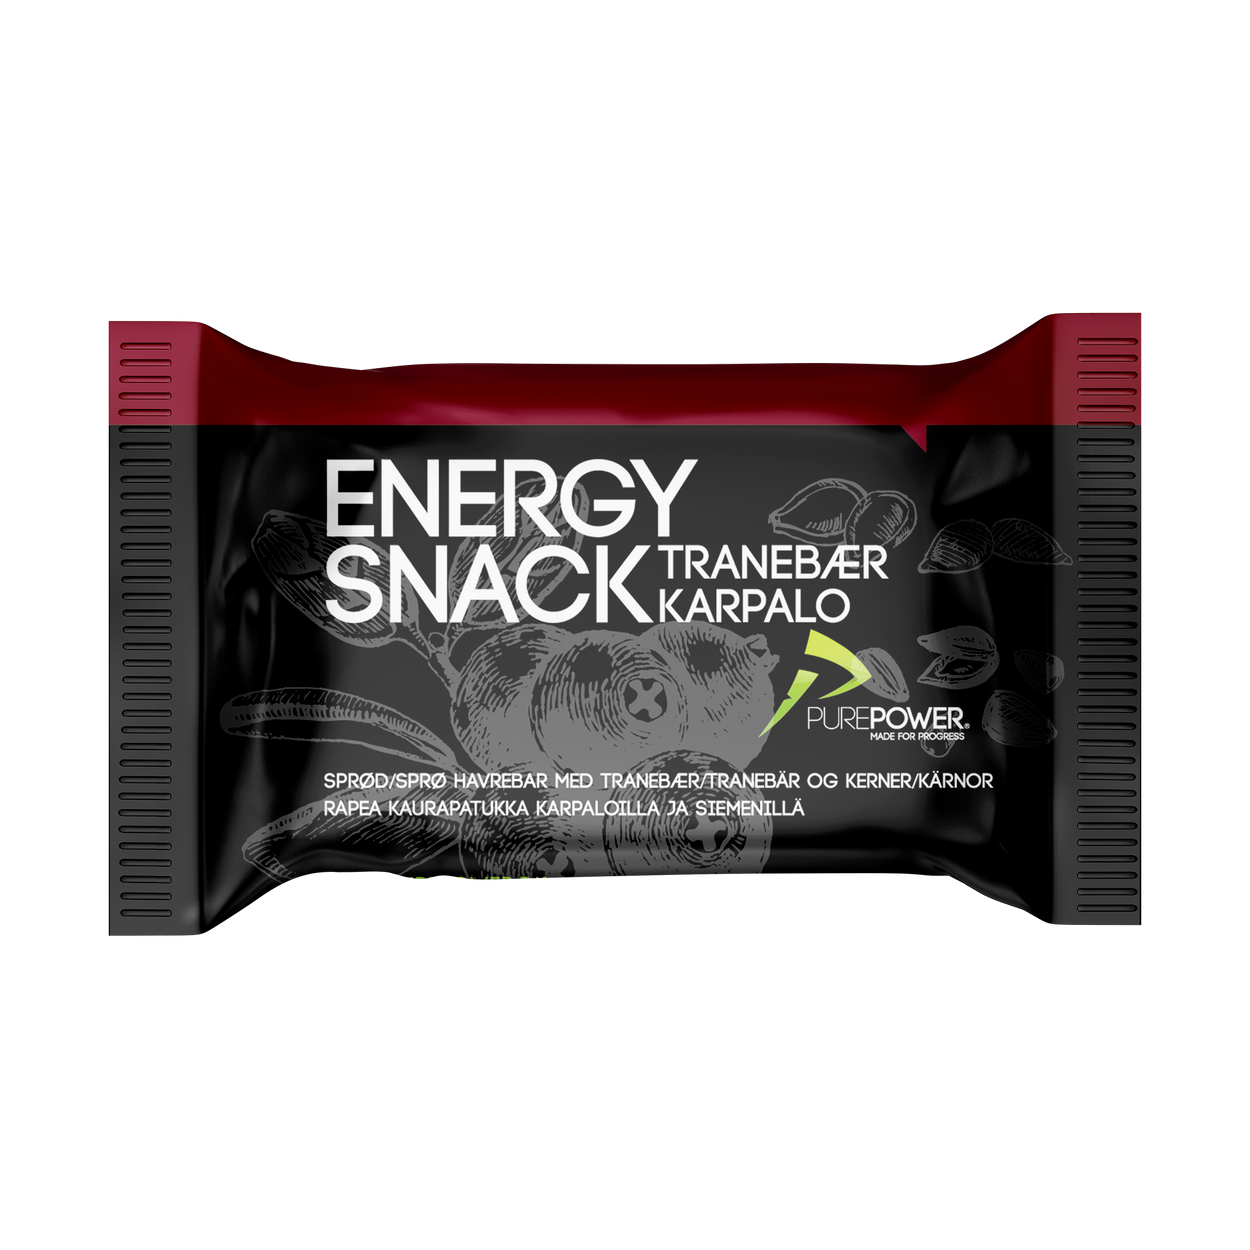 Energy Snack Tranebær 60 g